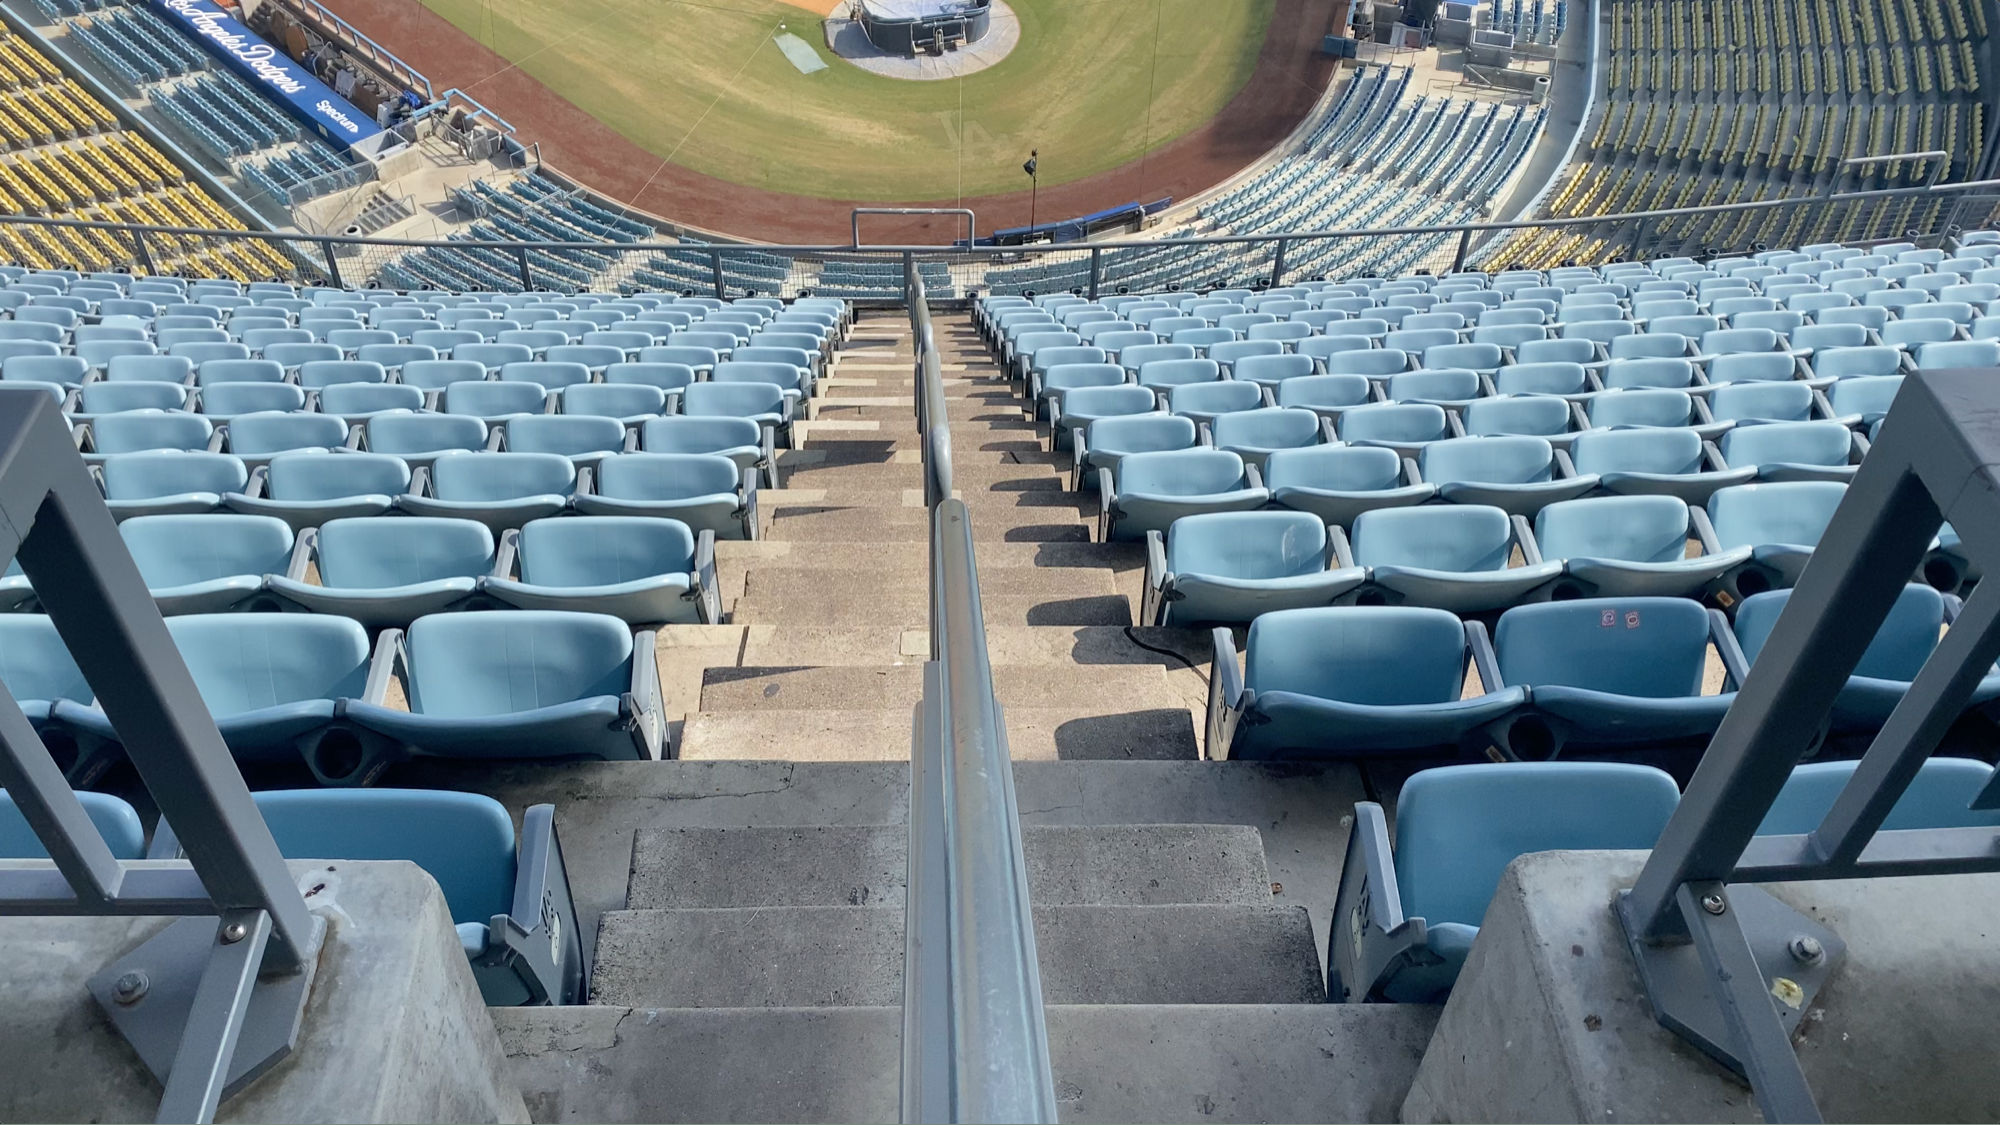 Dodger Stadium View from Top Deck